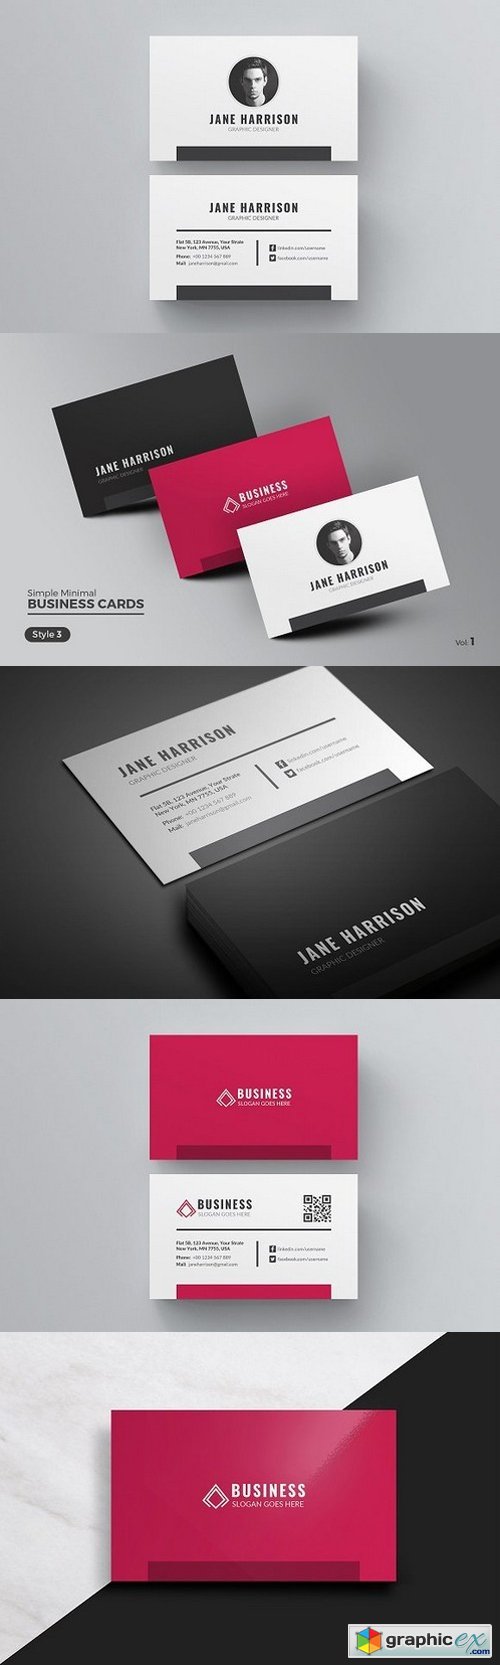 Clean & Minimal Business Card